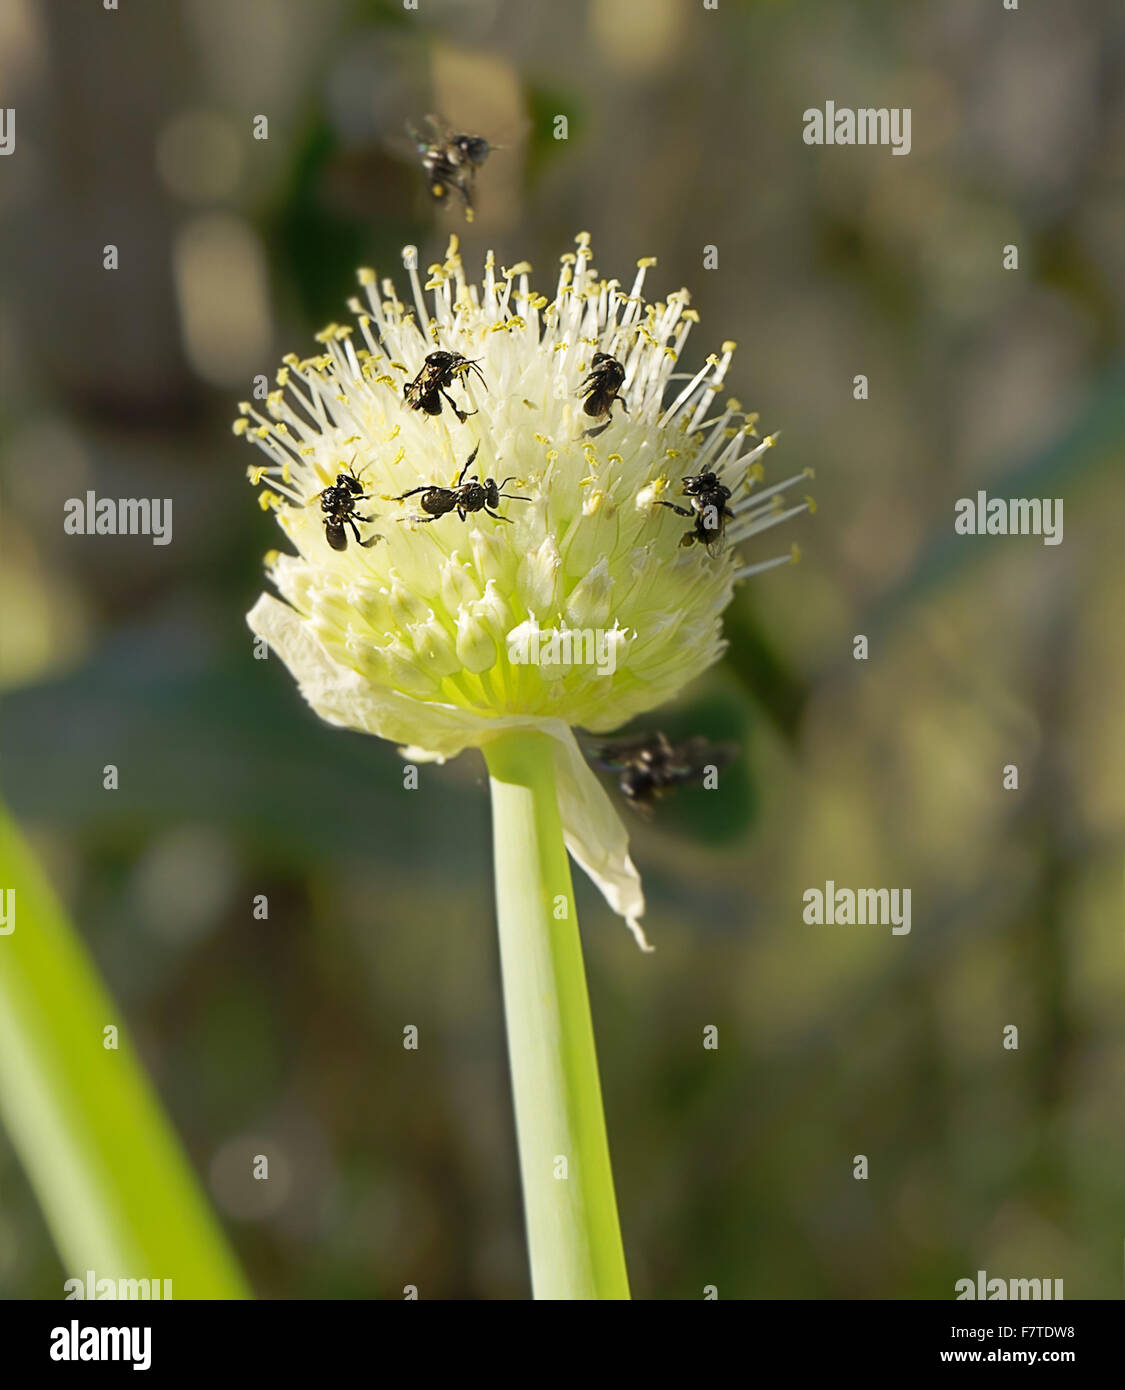 Very small minute Australian native stingless bees Tetragonula on an onion flower Stock Photo